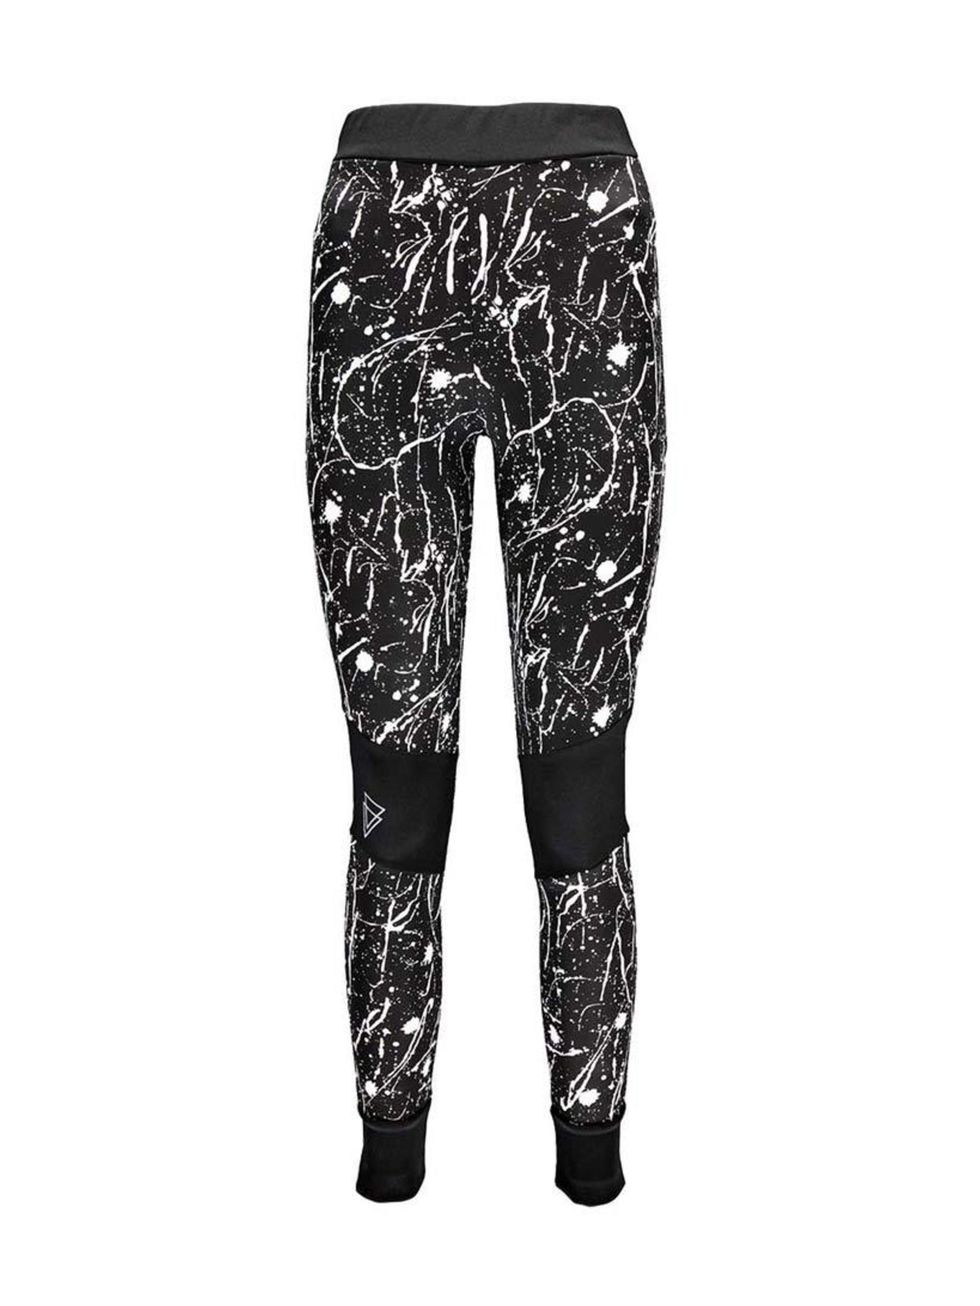 <p>If Jackson Pollock made leggings... as worn by Sub-Editor Claire Sibbick.</p>

<p><a href="http://www.boohoo.com/boohoo-fit/tamara-splatter-print-sports-leggings/invt/azz13166" target="_blank">Boohoo</a> leggings, £14</p>